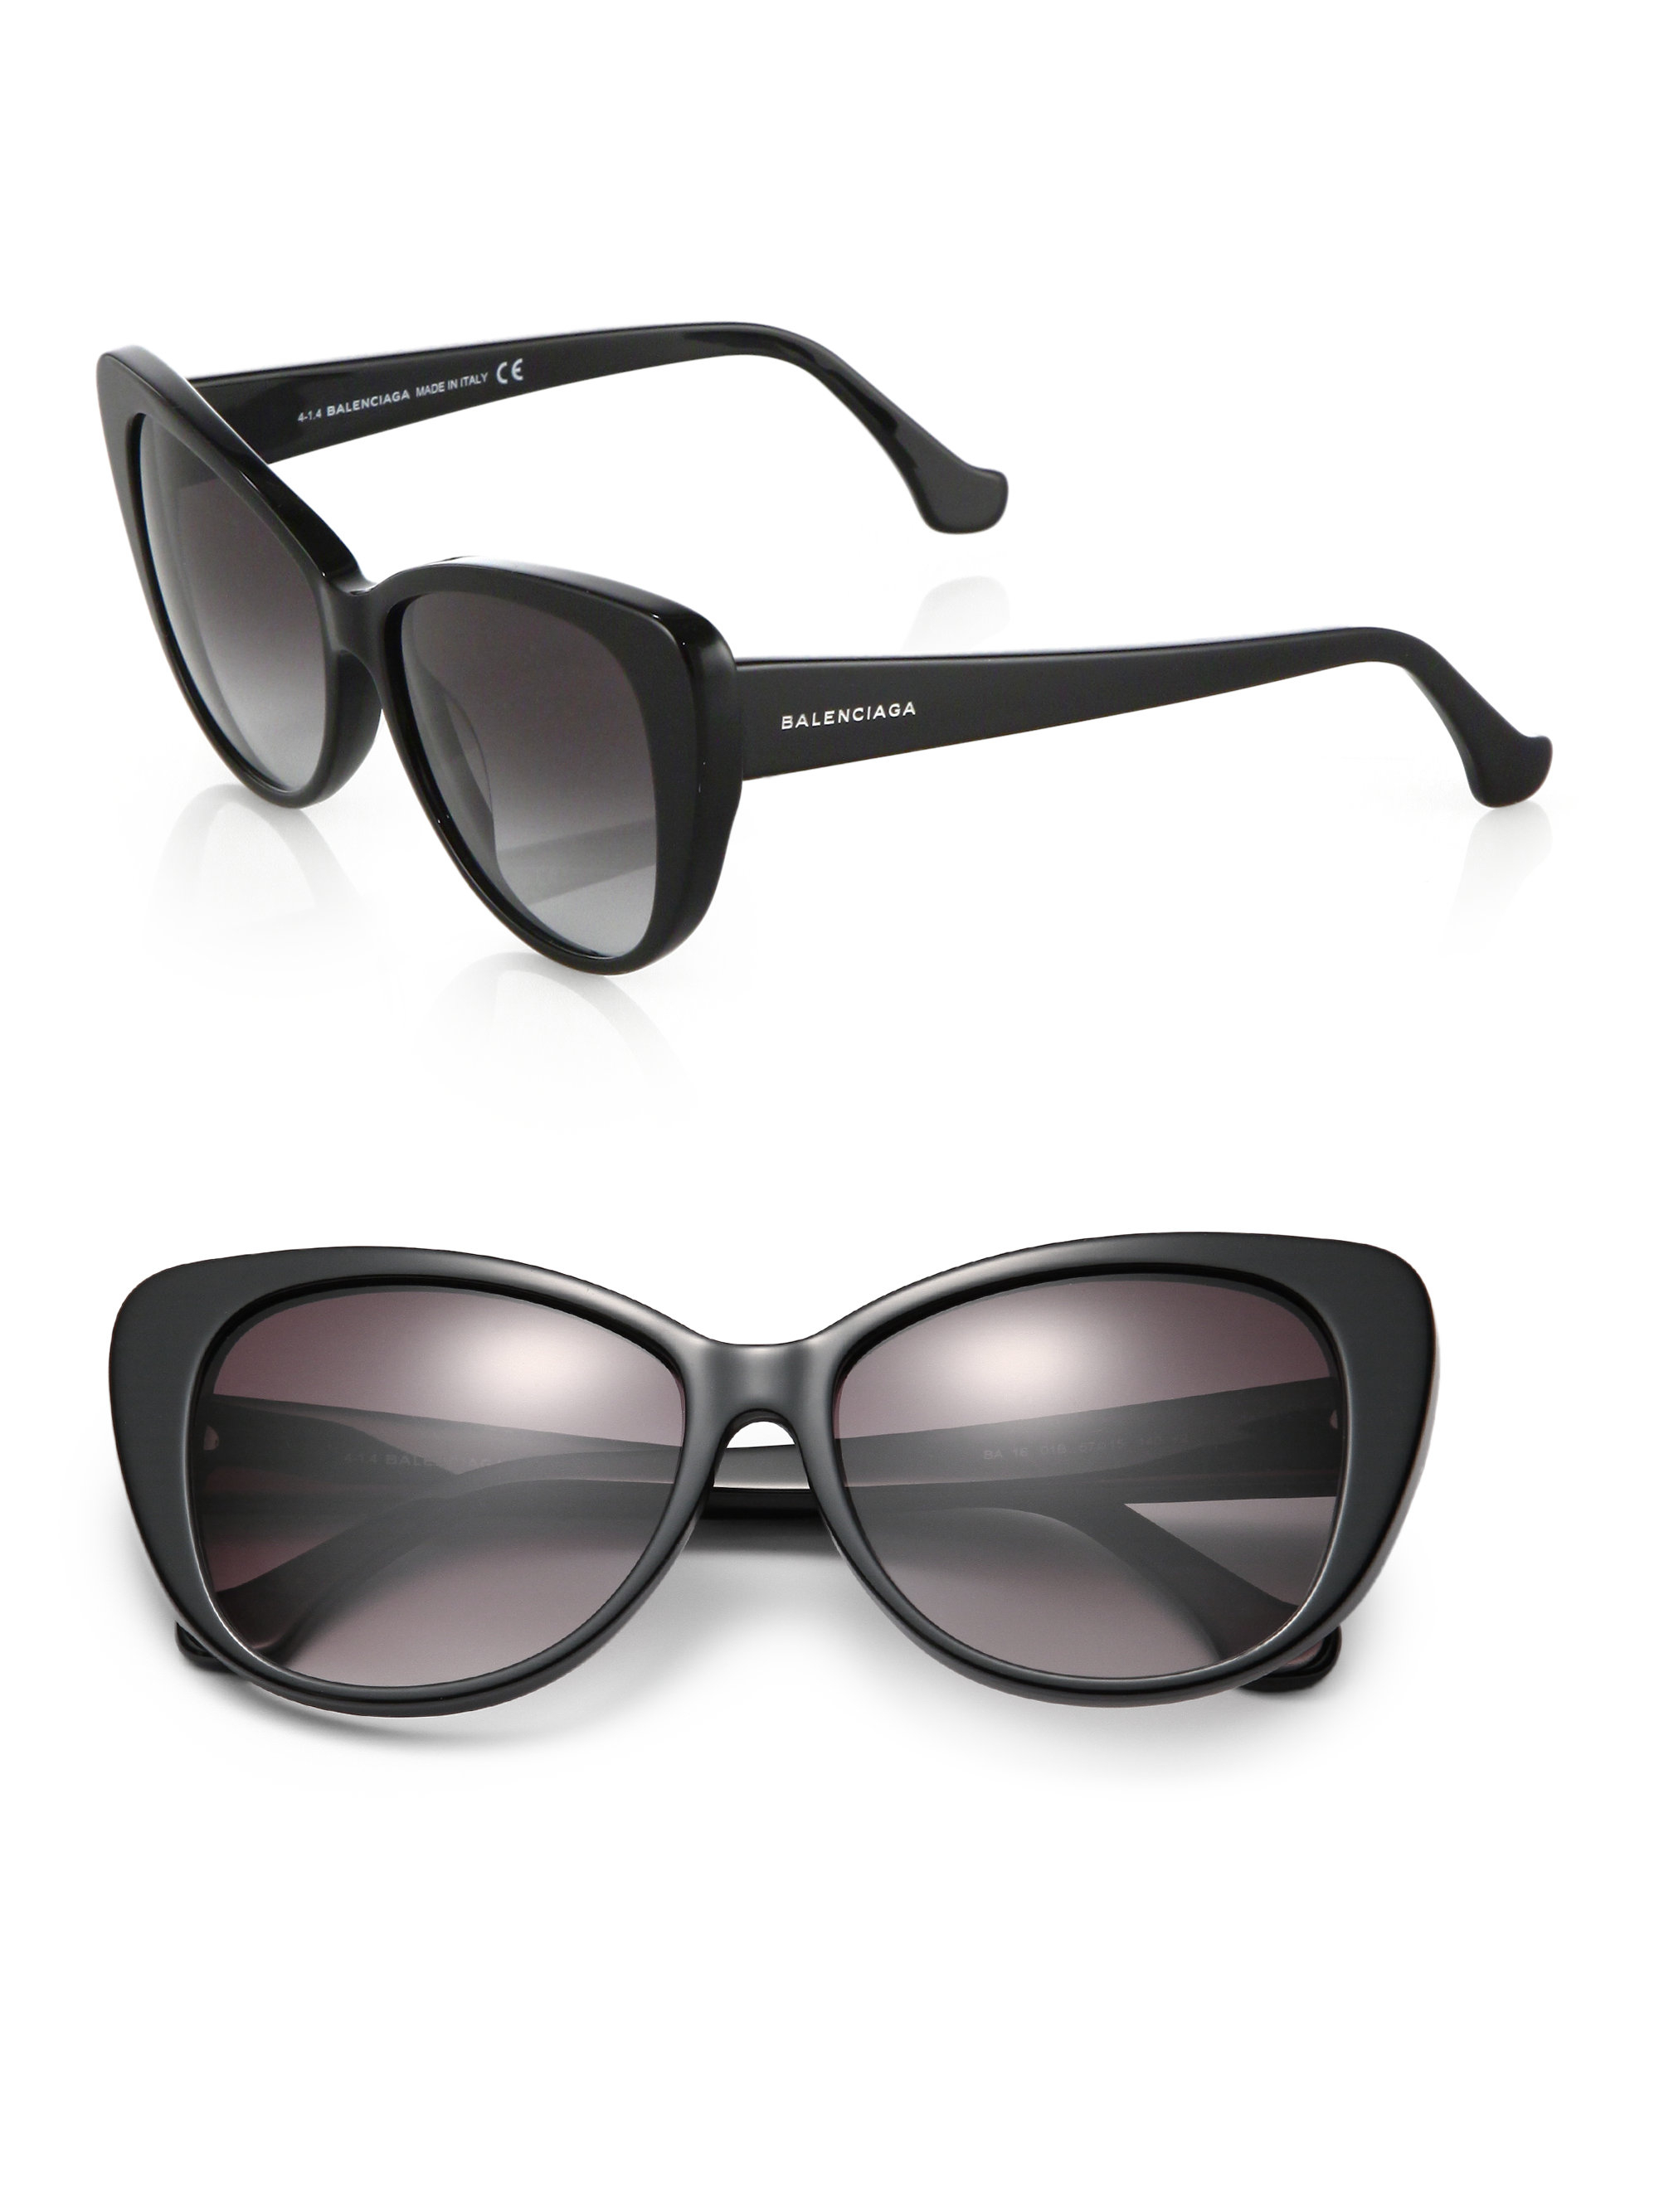 Balenciaga 57mm Cat's-eye Sunglasses in Black - Lyst